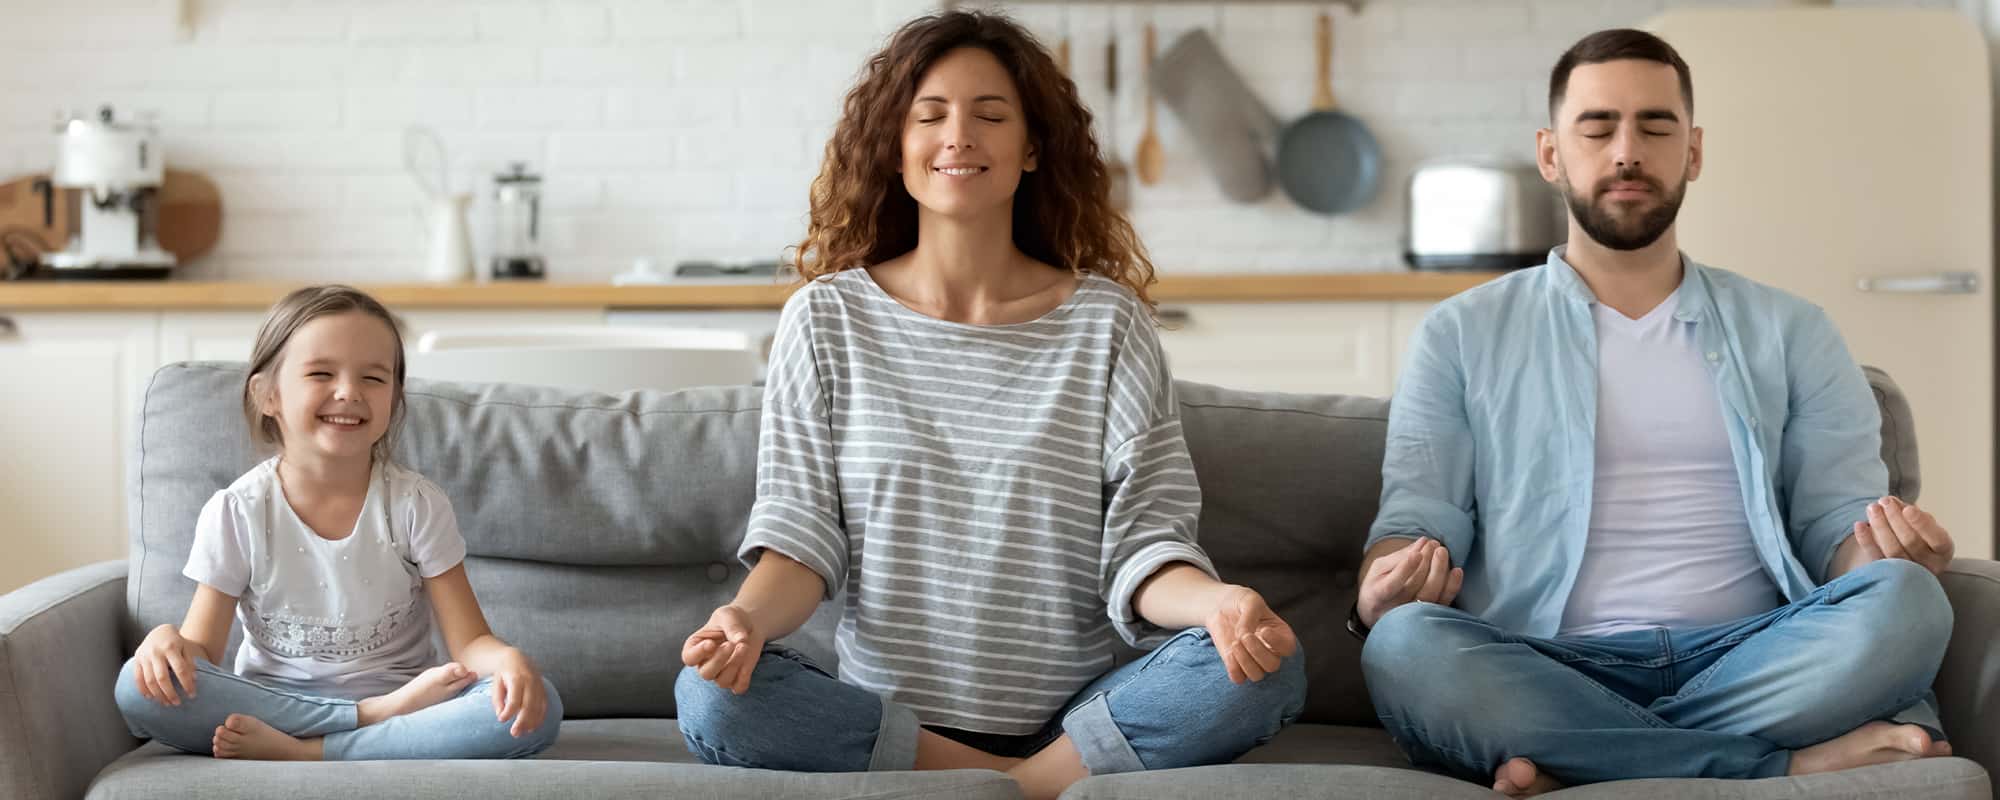 Mindfulness Tips for Calming Big Feelings